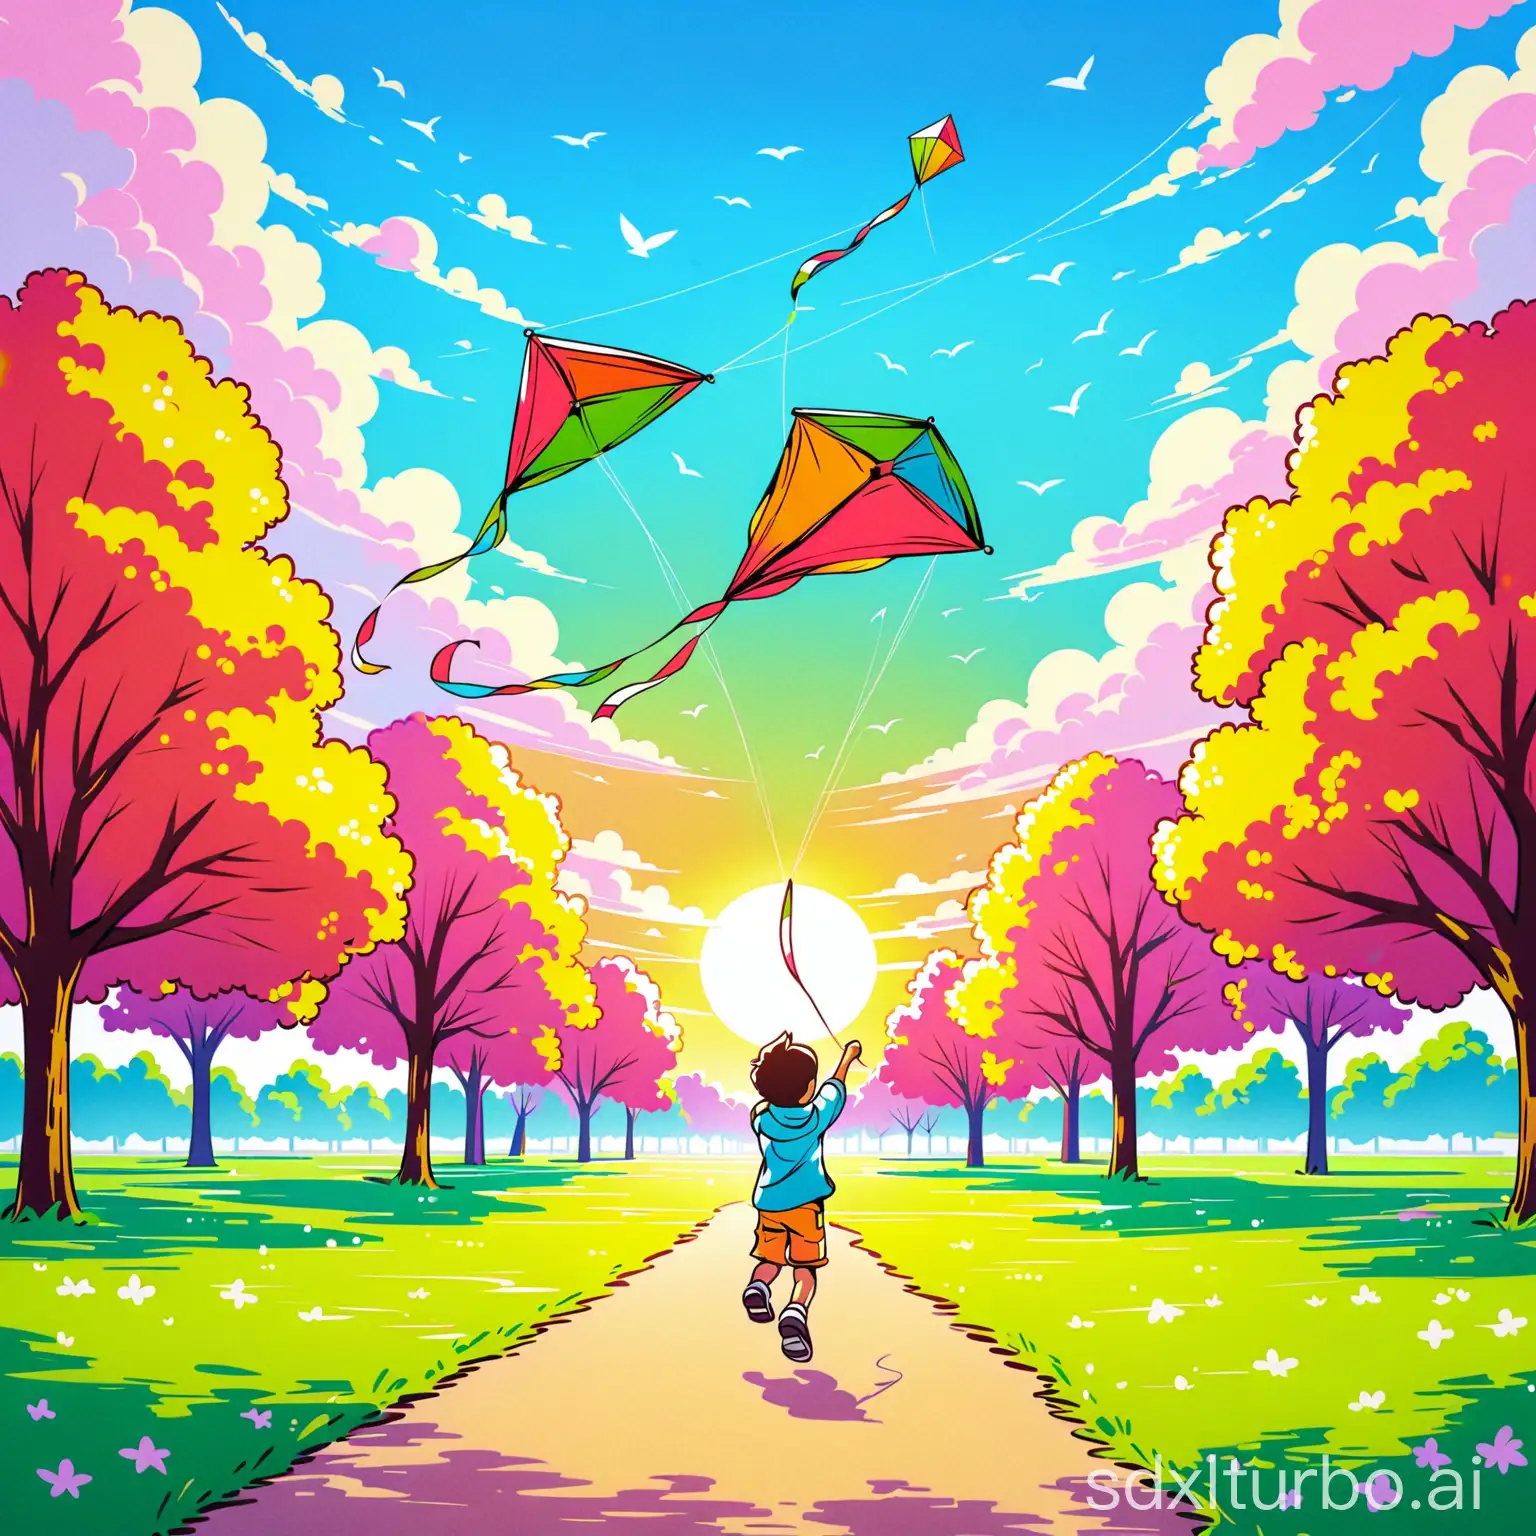 Boy-Flying-Kite-in-Spring-Park